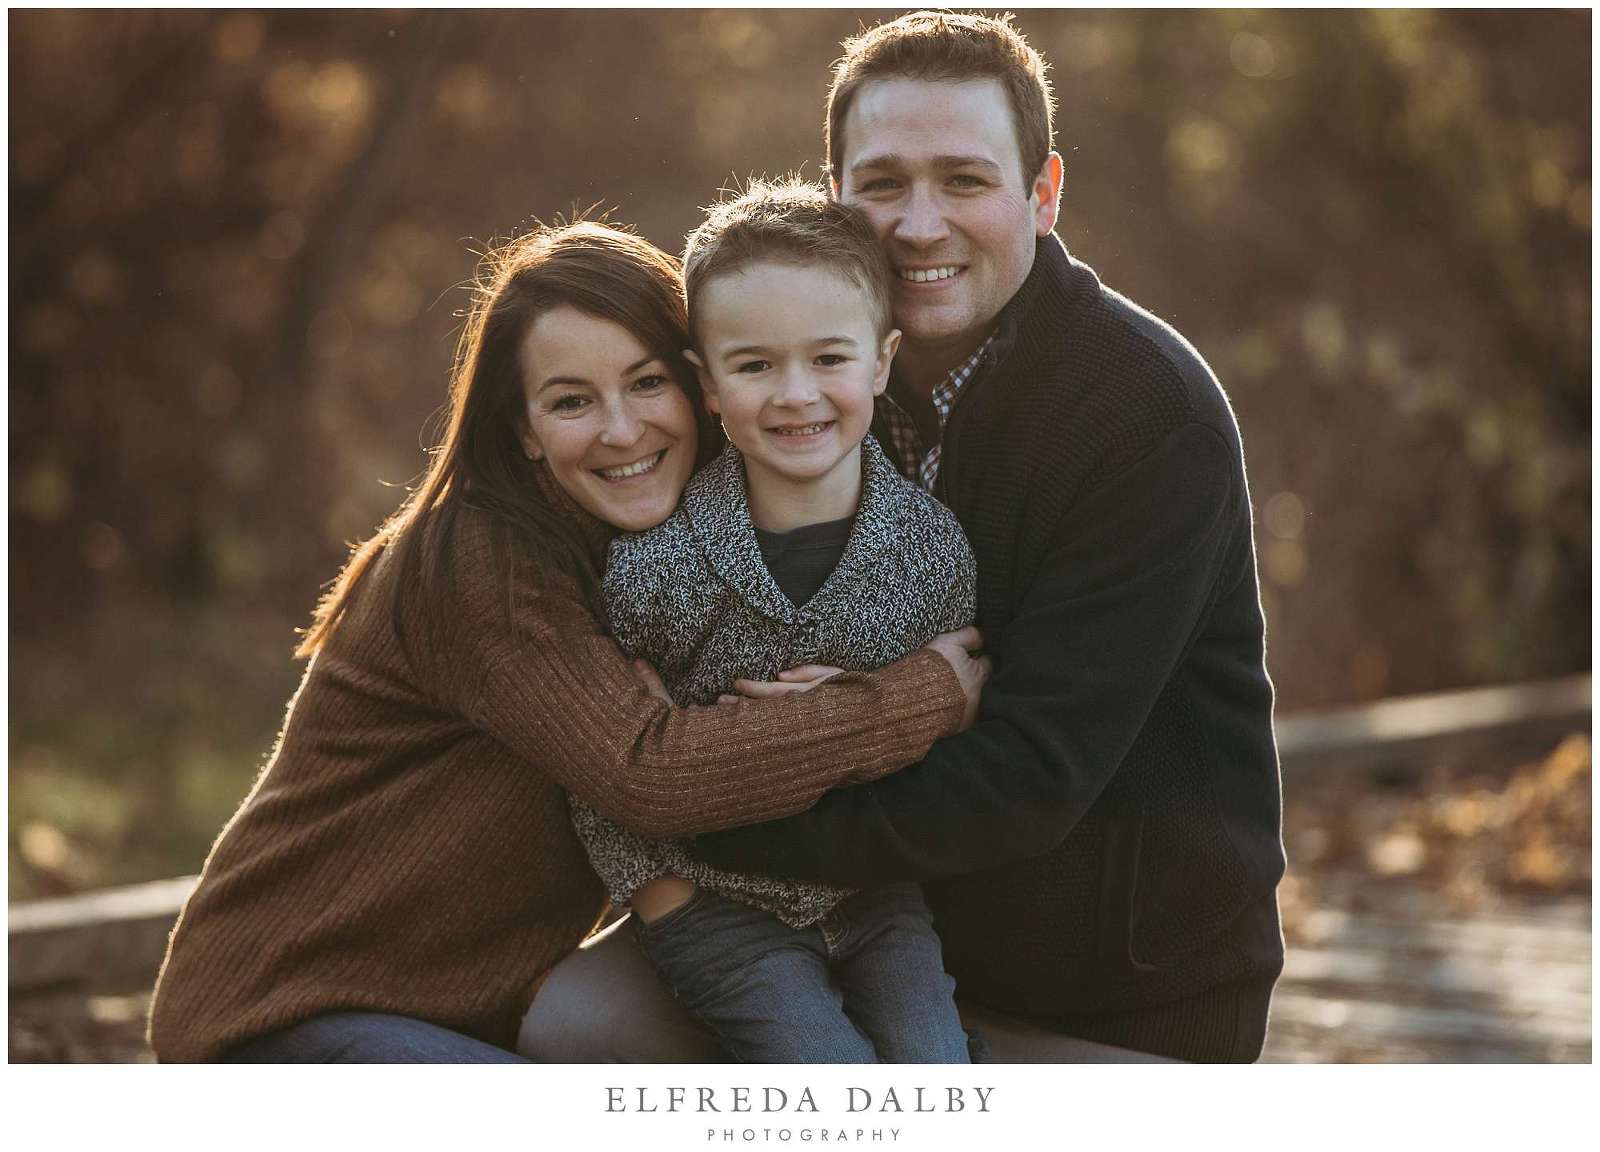 Gallery | Family portrait poses, Photography poses family, Family photo  studio